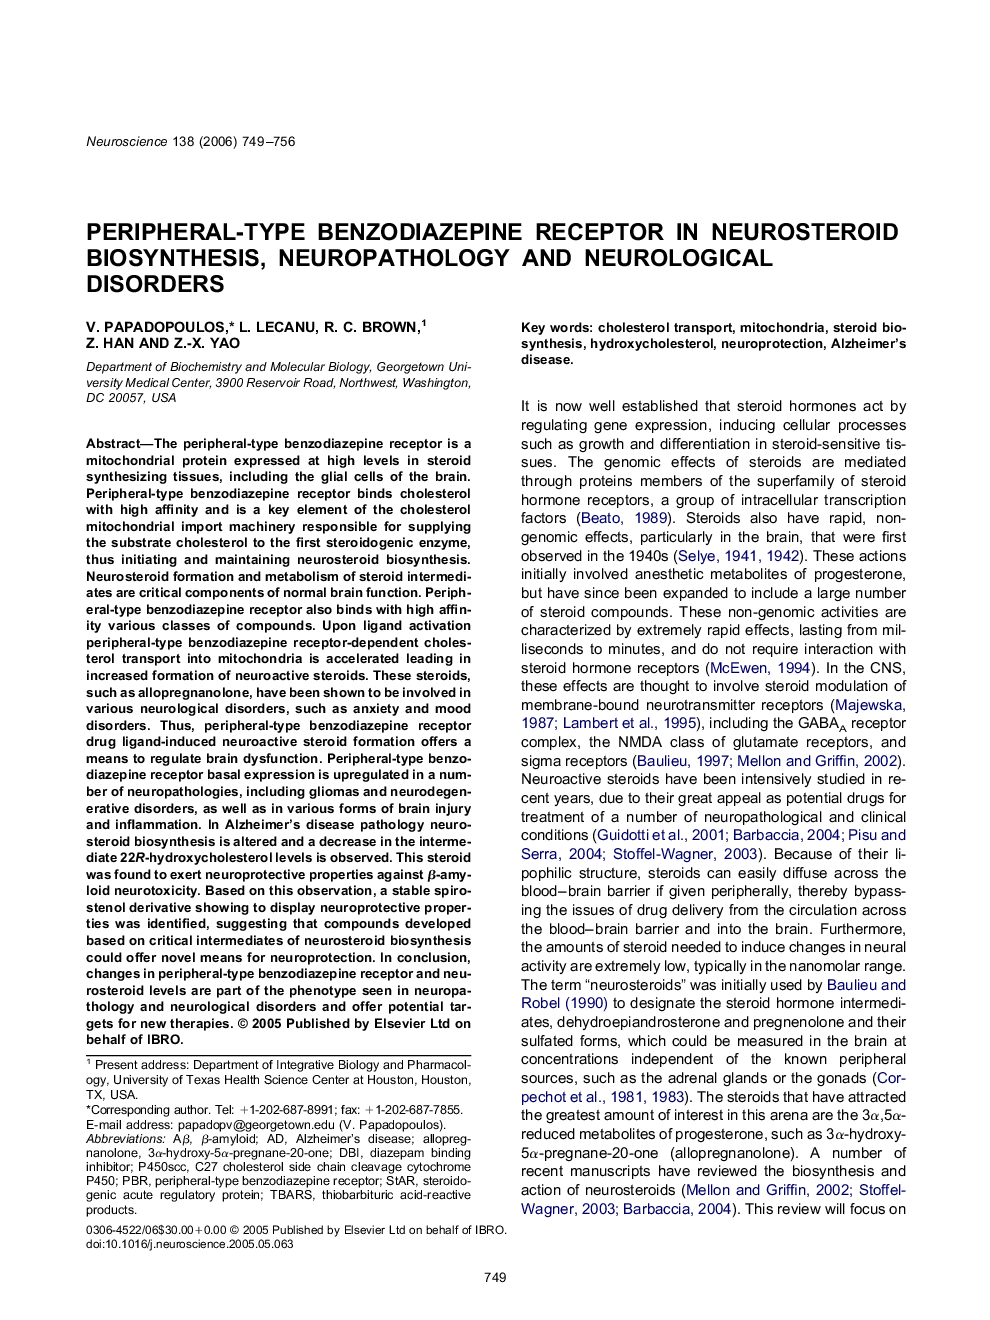 Peripheral-type benzodiazepine receptor in neurosteroid biosynthesis, neuropathology and neurological disorders